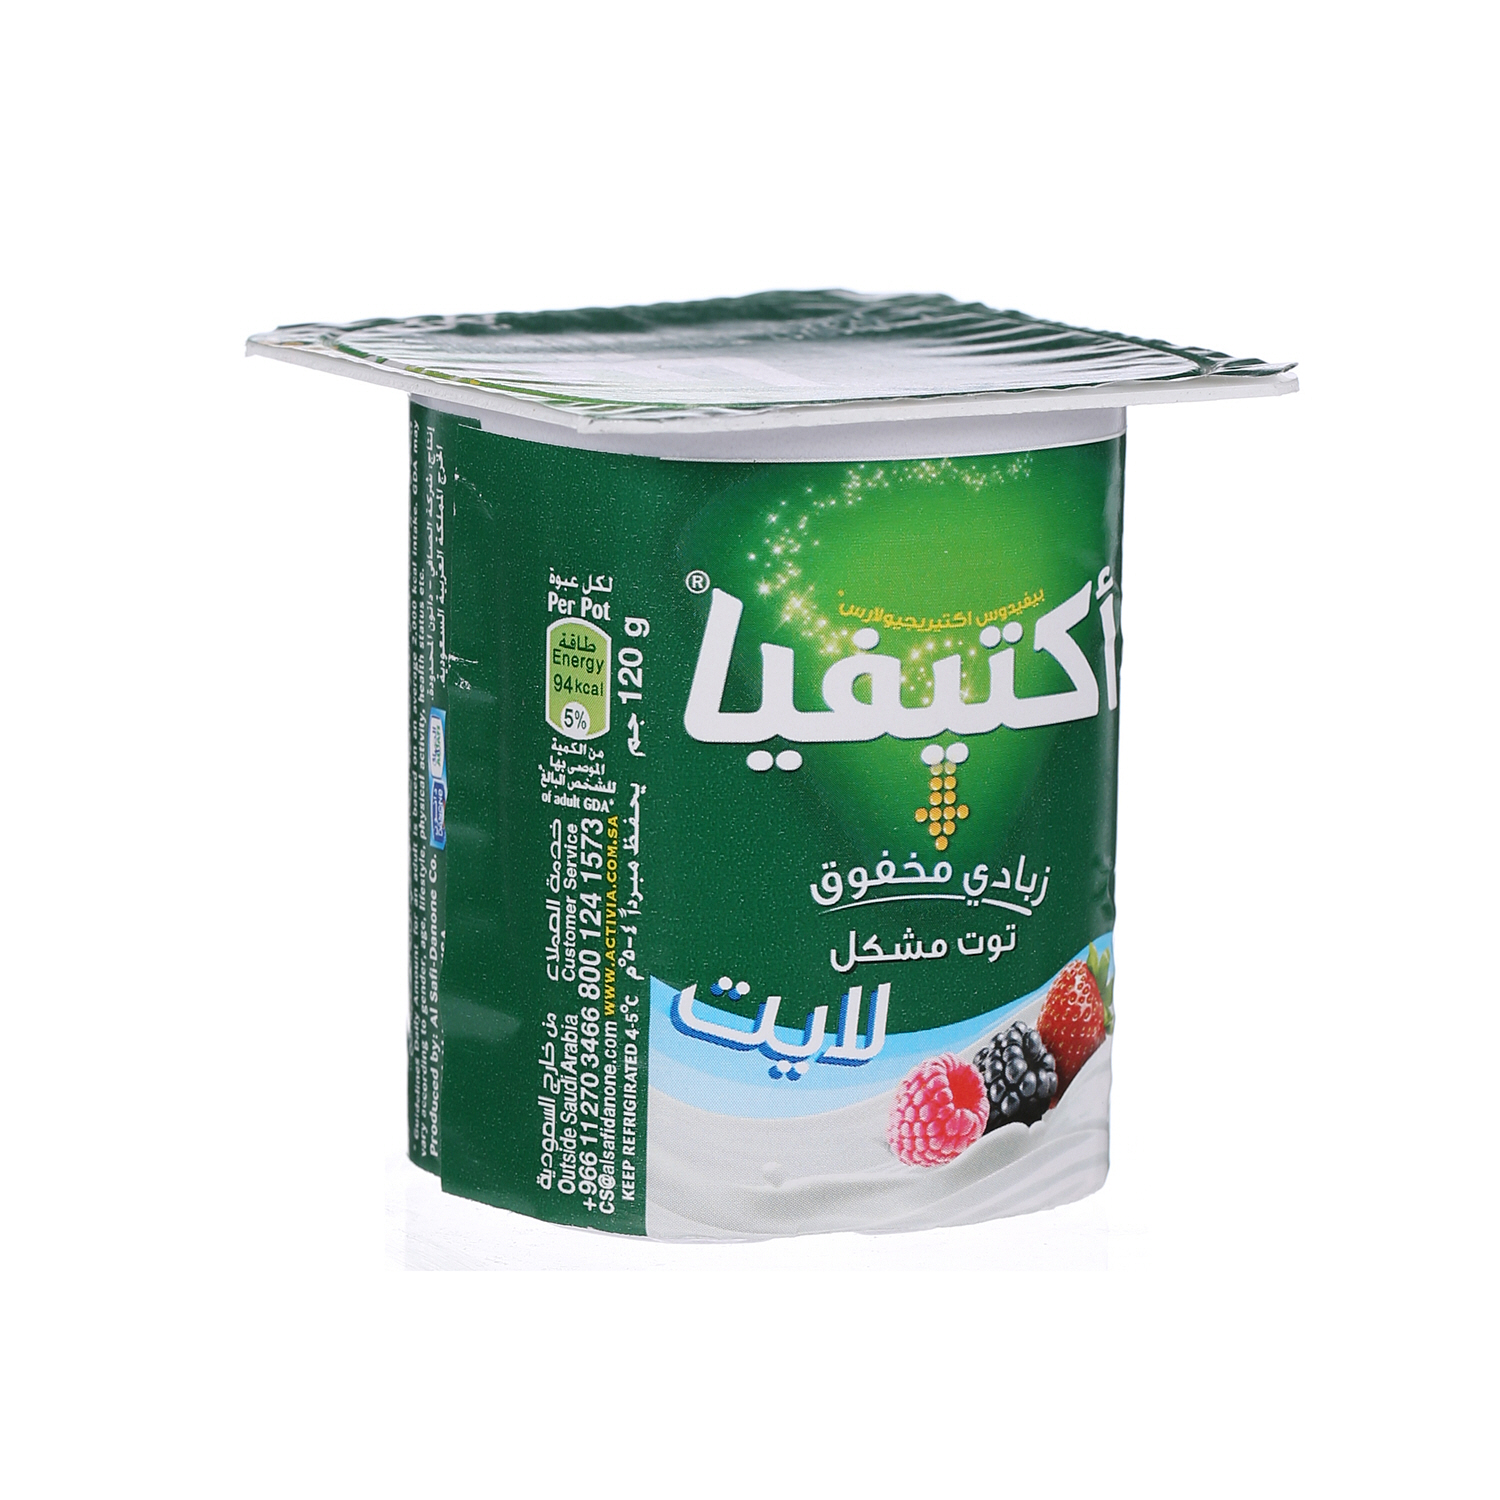 Al Safi Danone Actvia Flavoured Yoghurt Mixed Berry Light 120gm